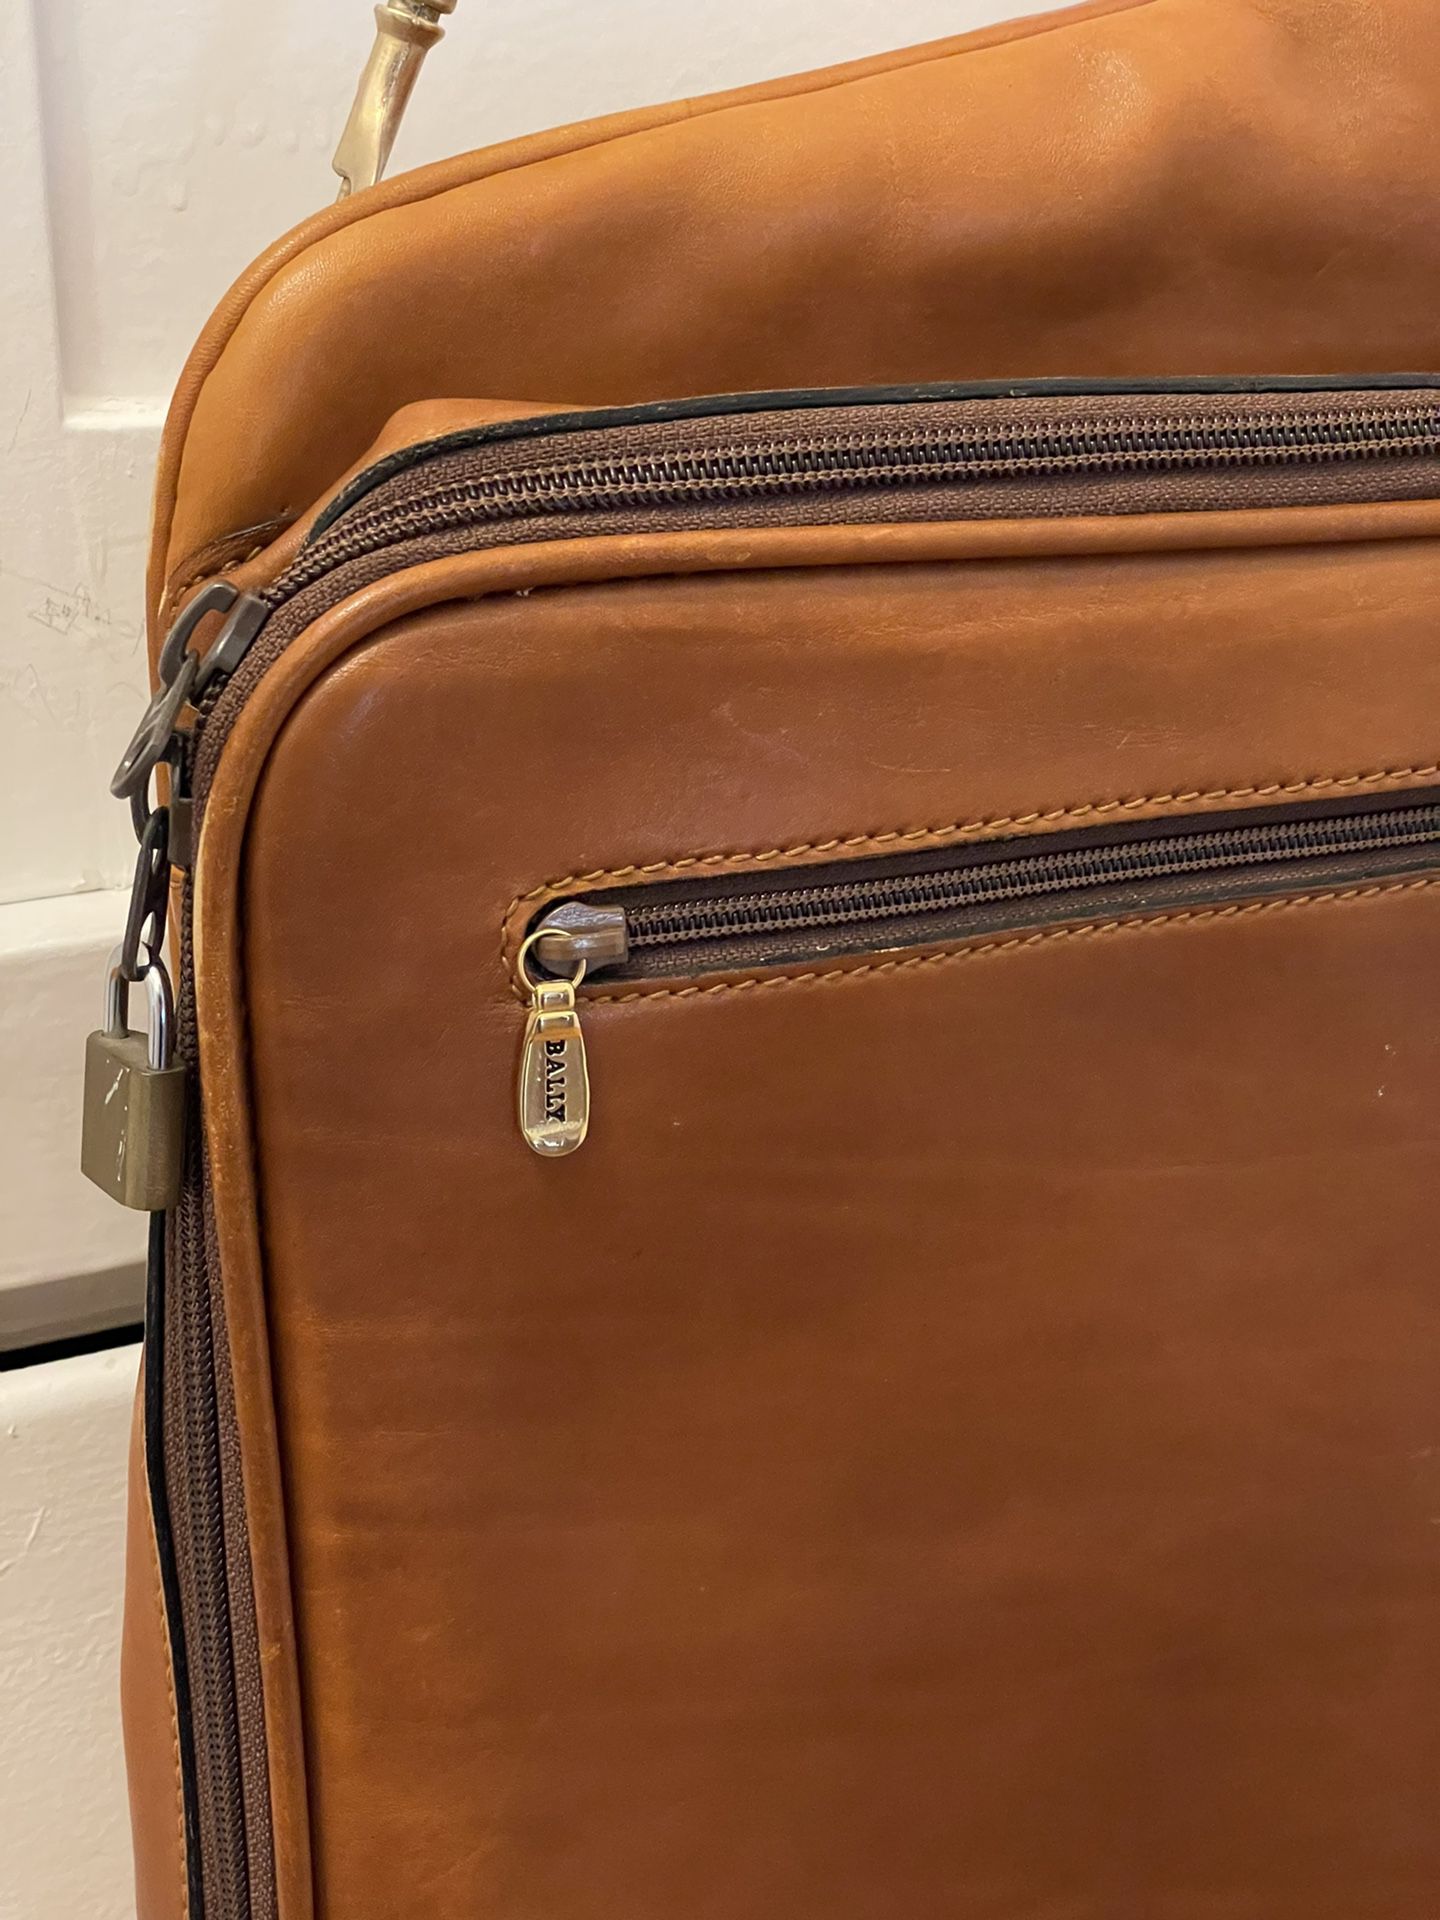 BALLY Garment Bag Suiter Travel Bifold Pebbled Leather Brown w Hangtag VTG RARE